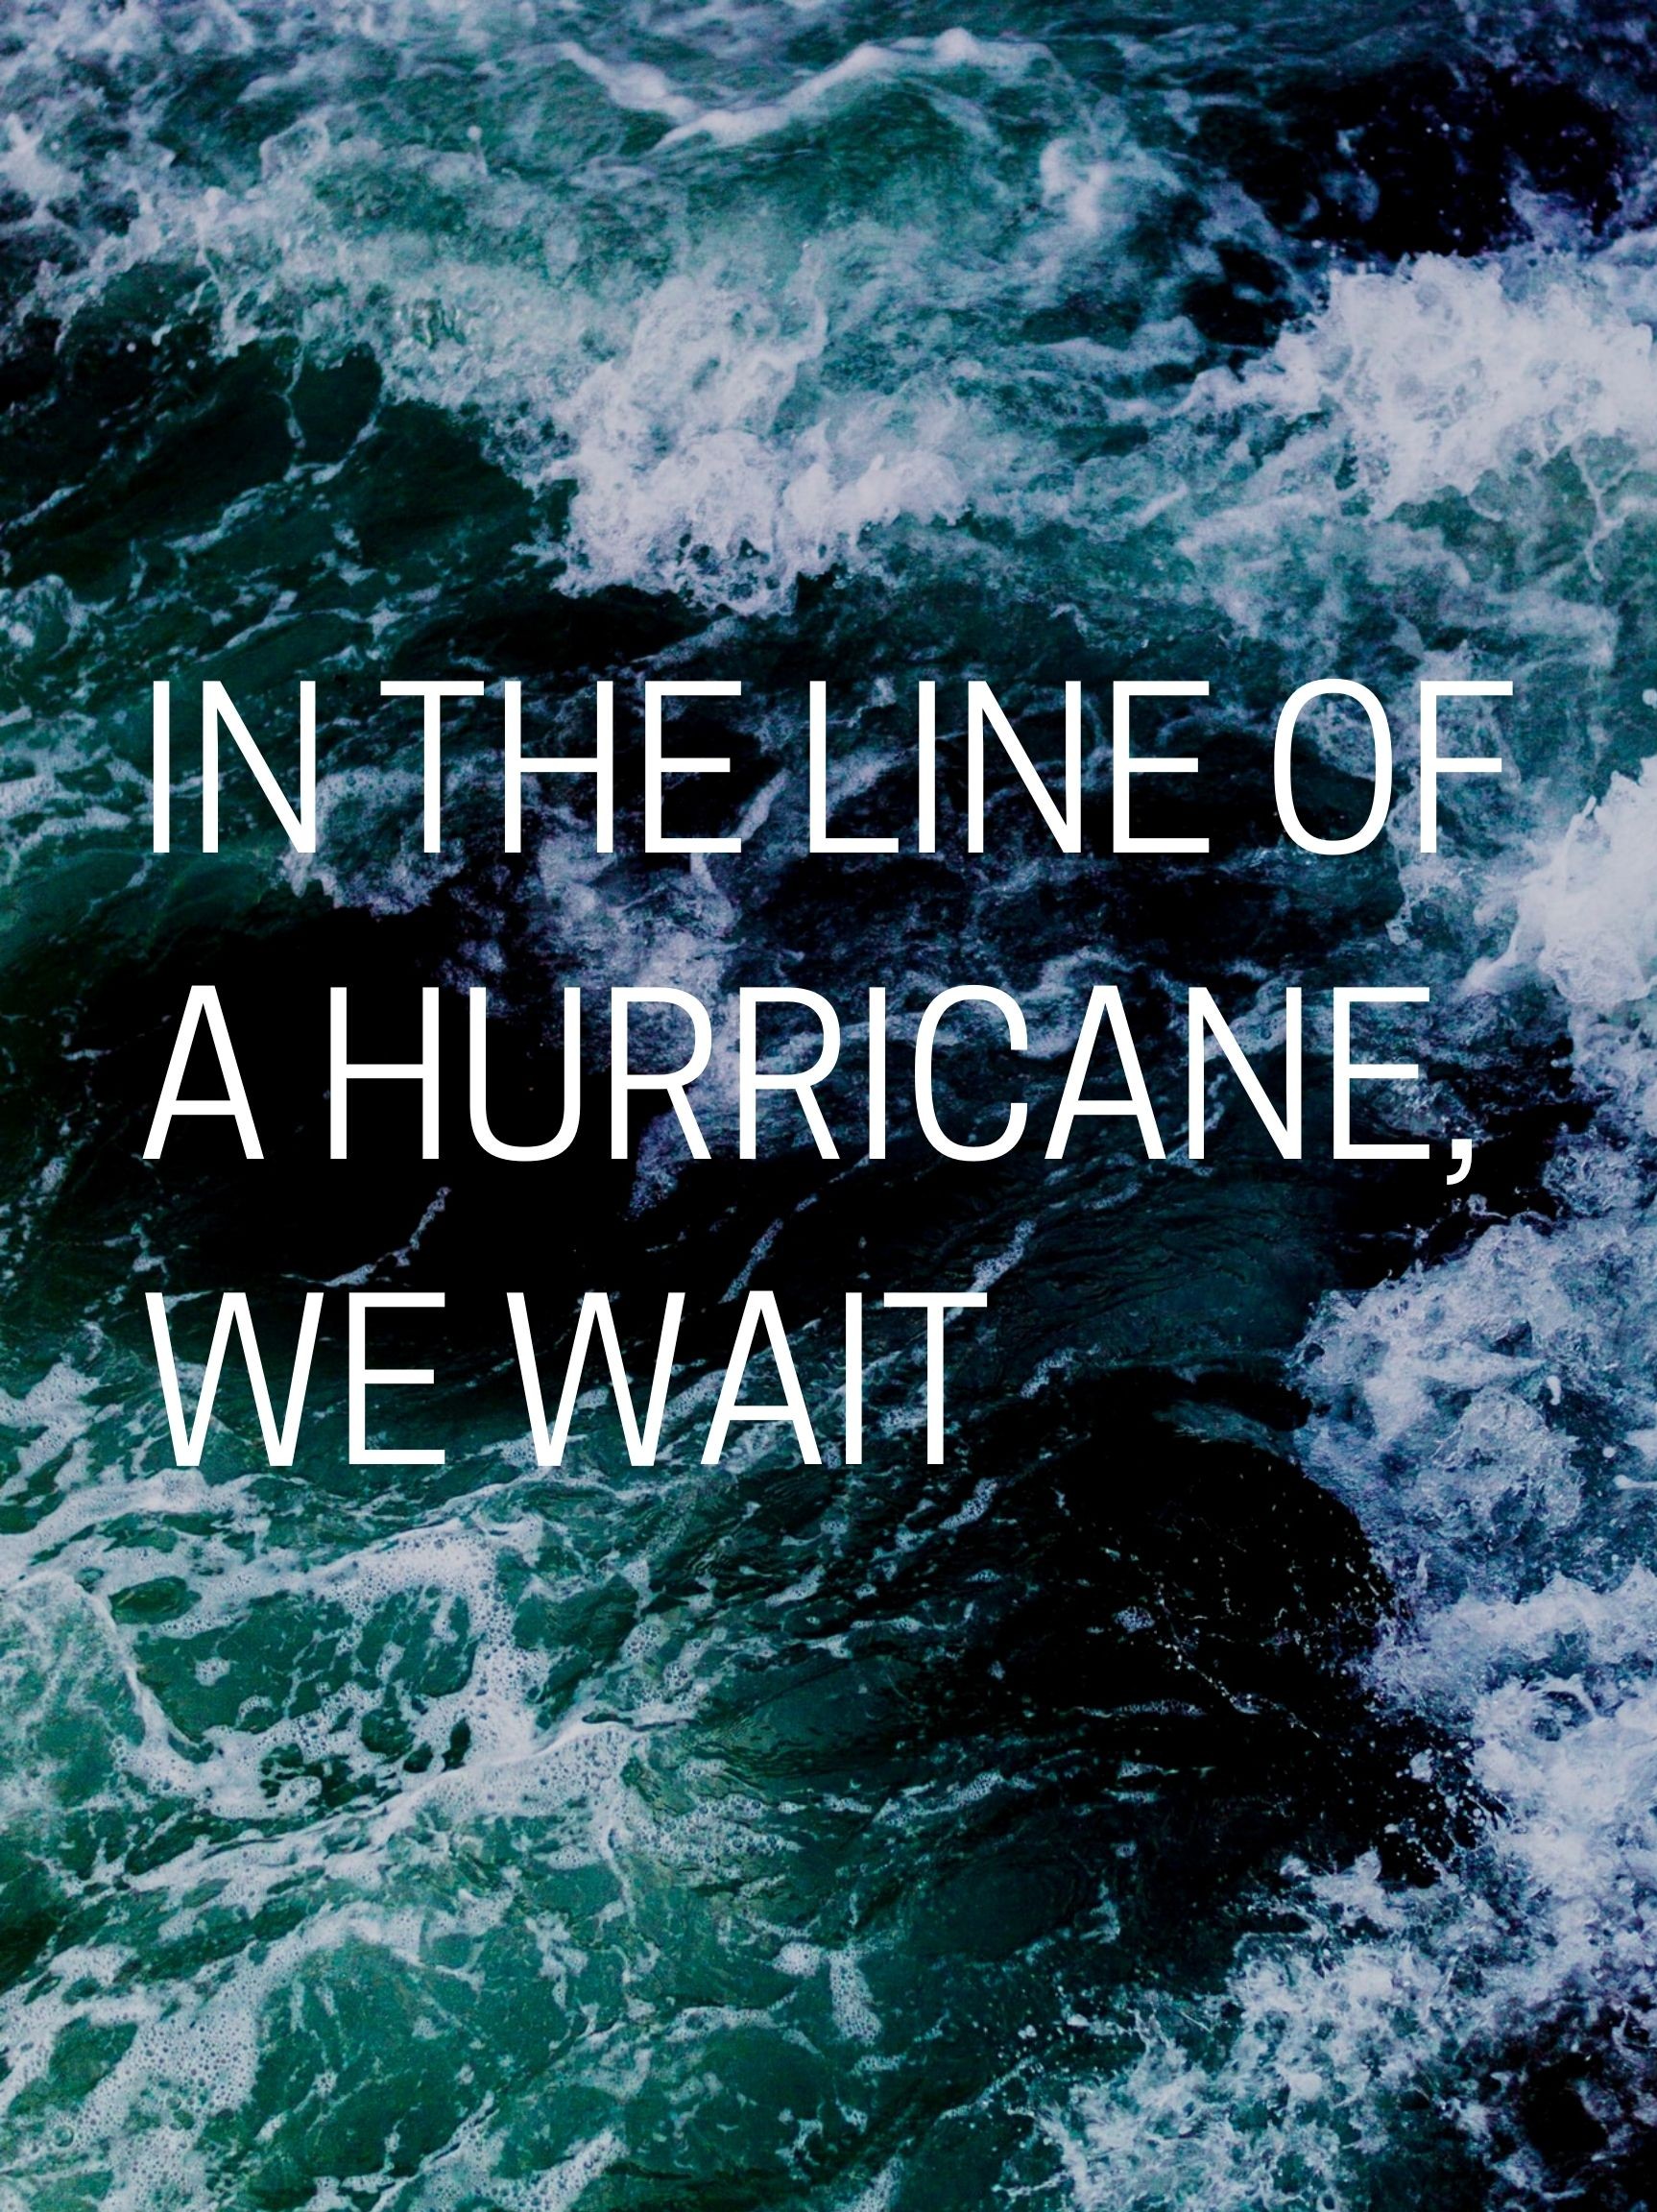 00172623048-in-the-line-of-a-hurricane-we-wait-16119753134707.jpg